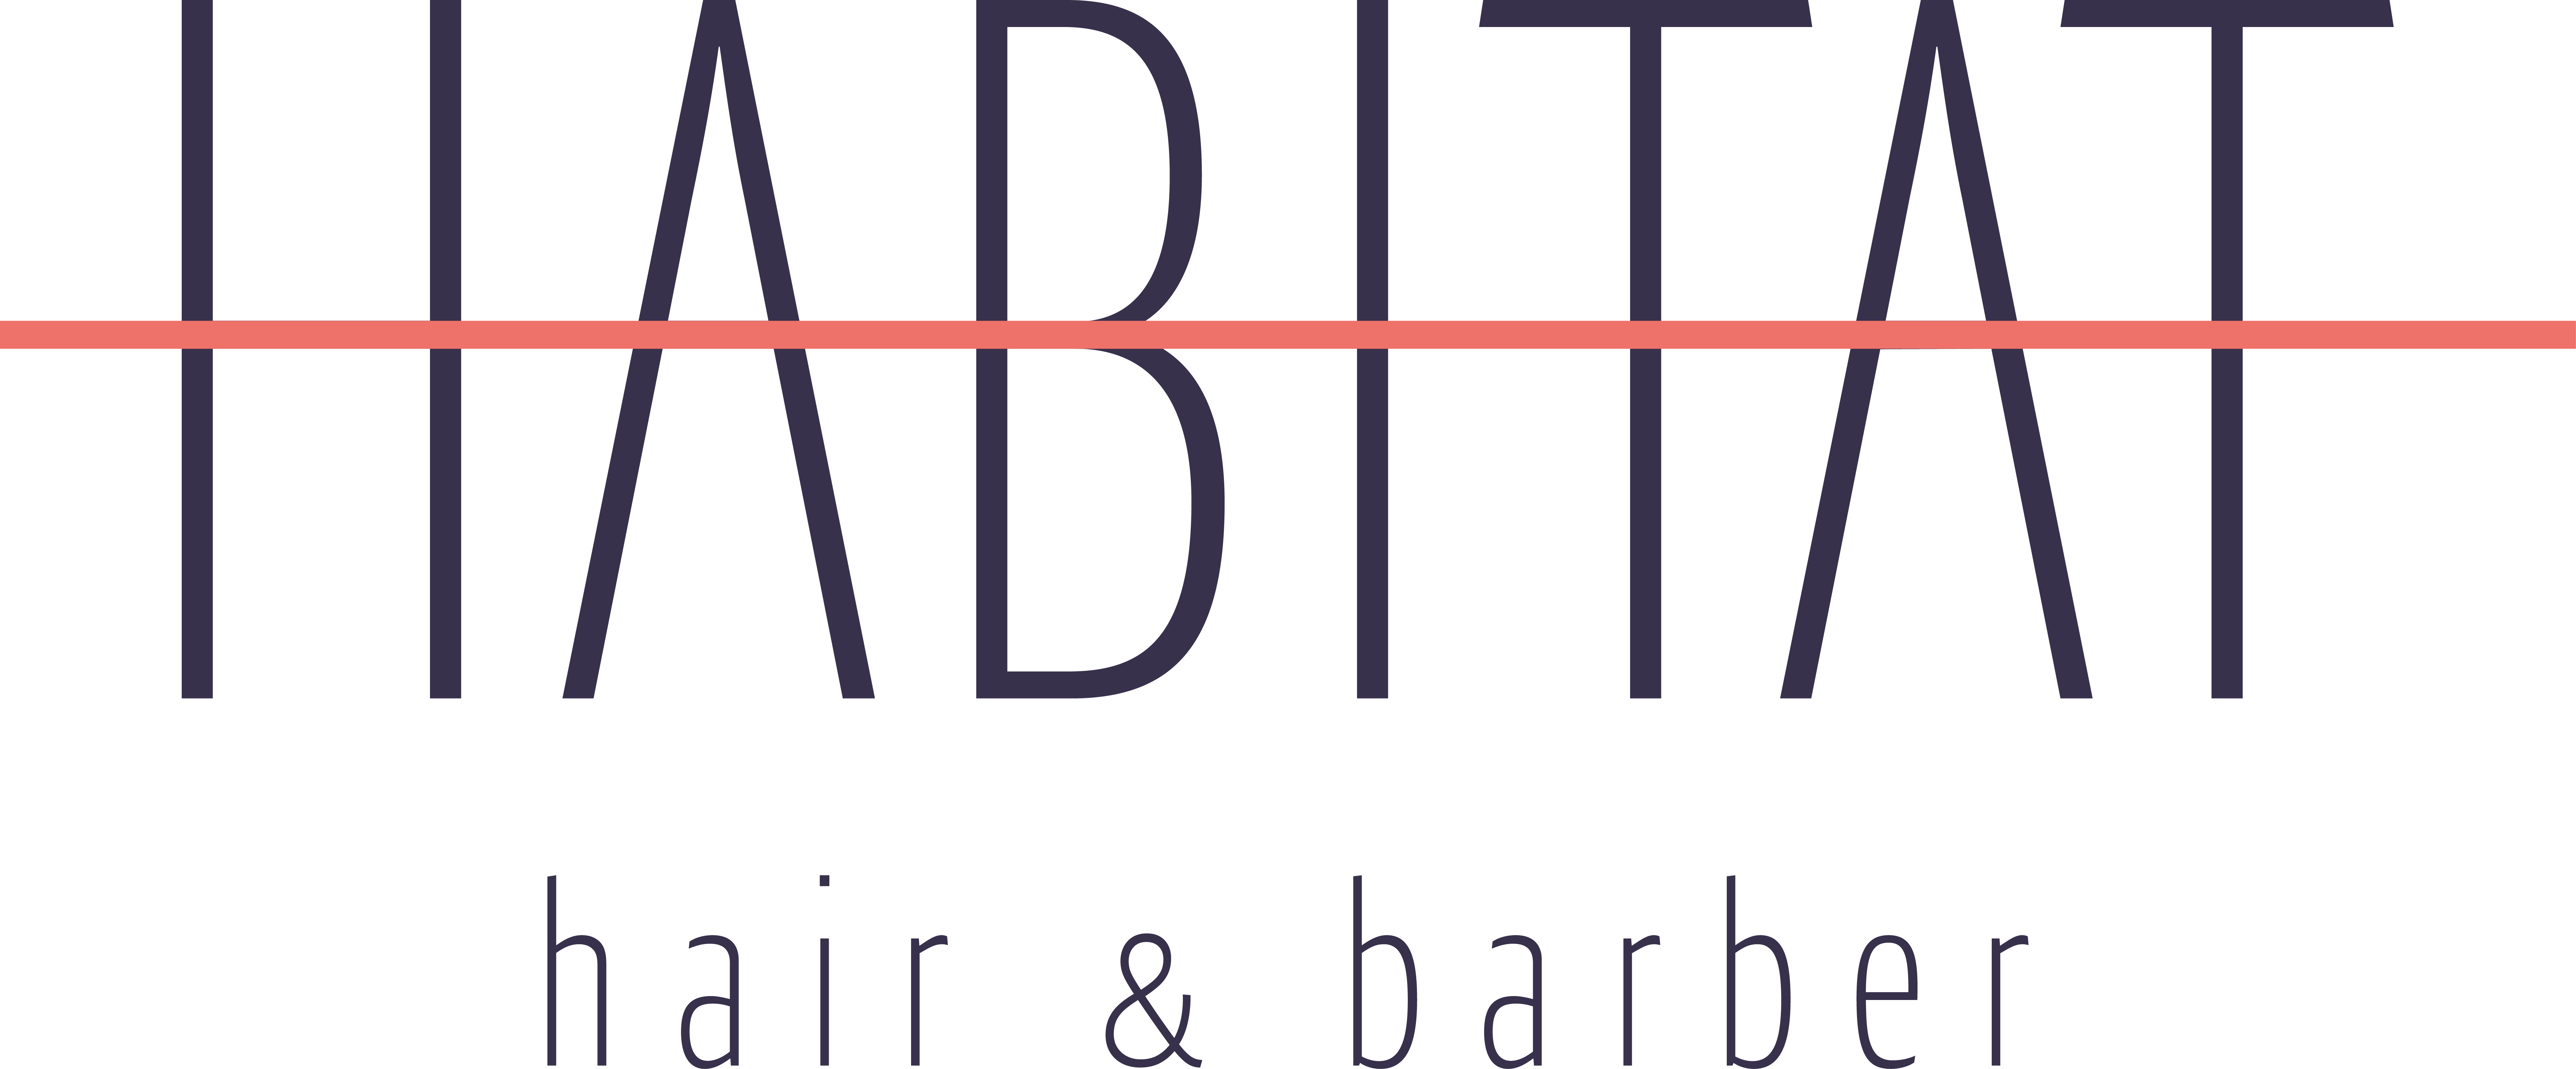 Habitat - hair & barber